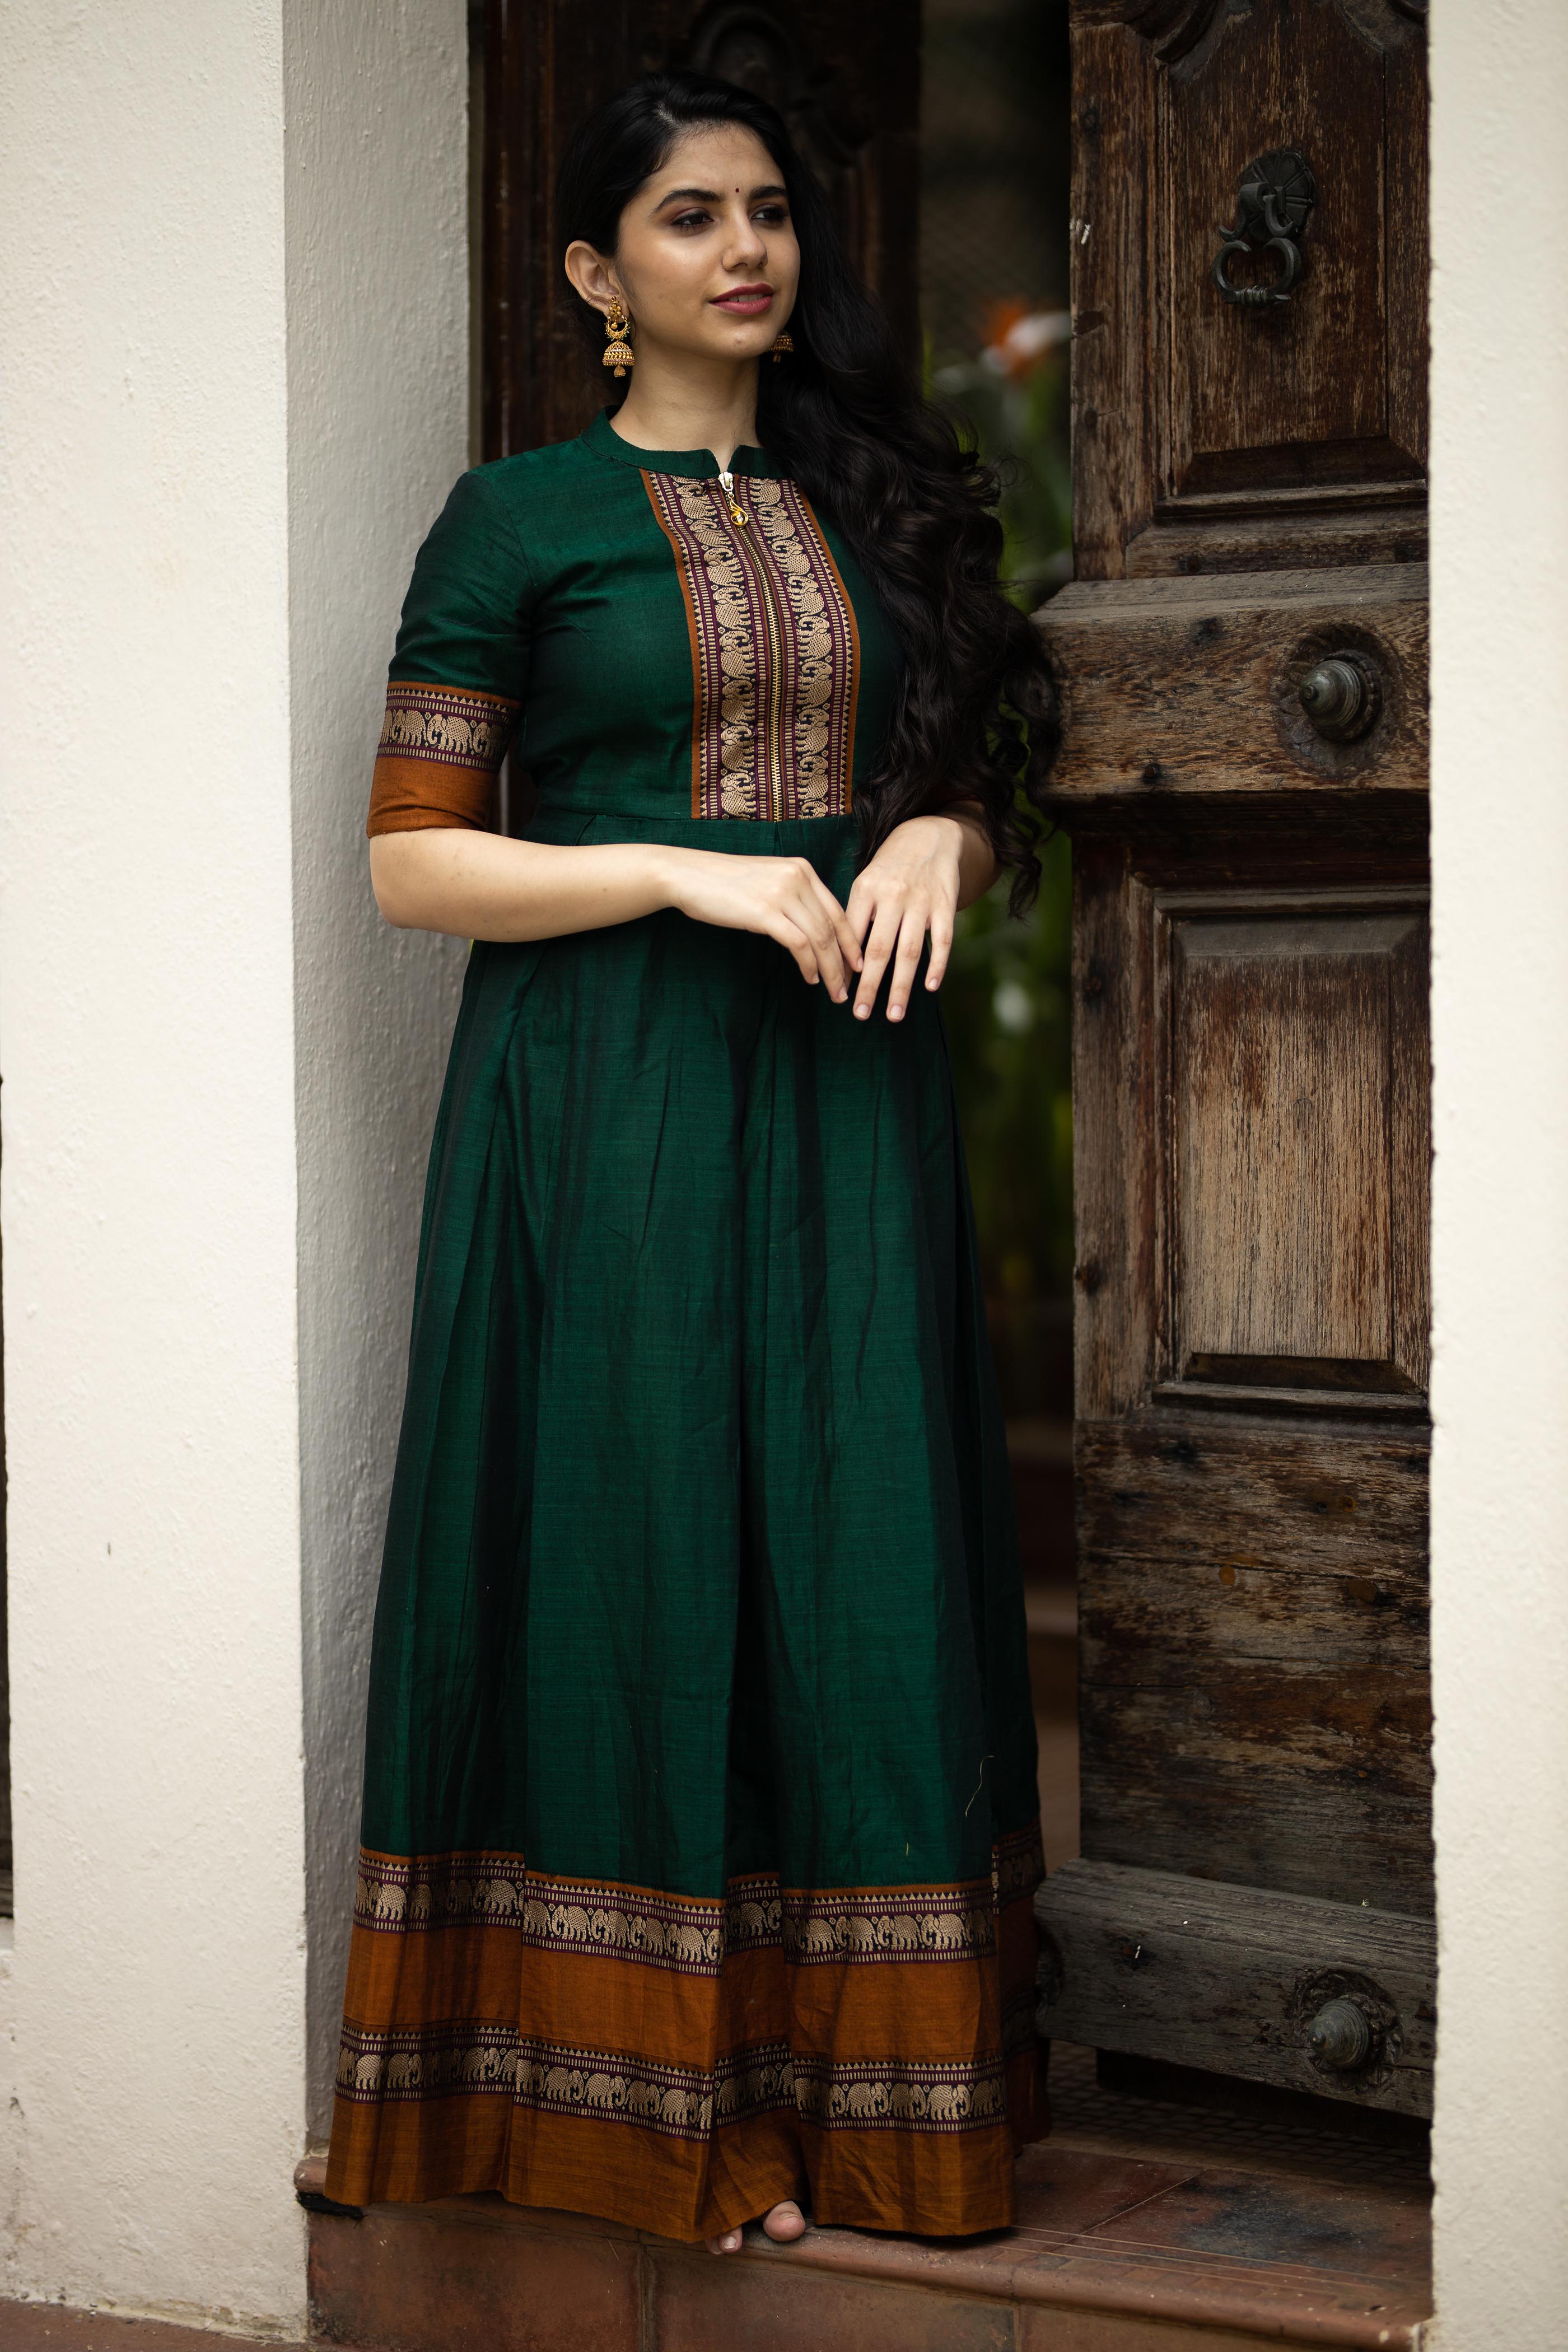 Women's Cotton Frocks: Long Dark Green Narayanpet Dress with Sleeves